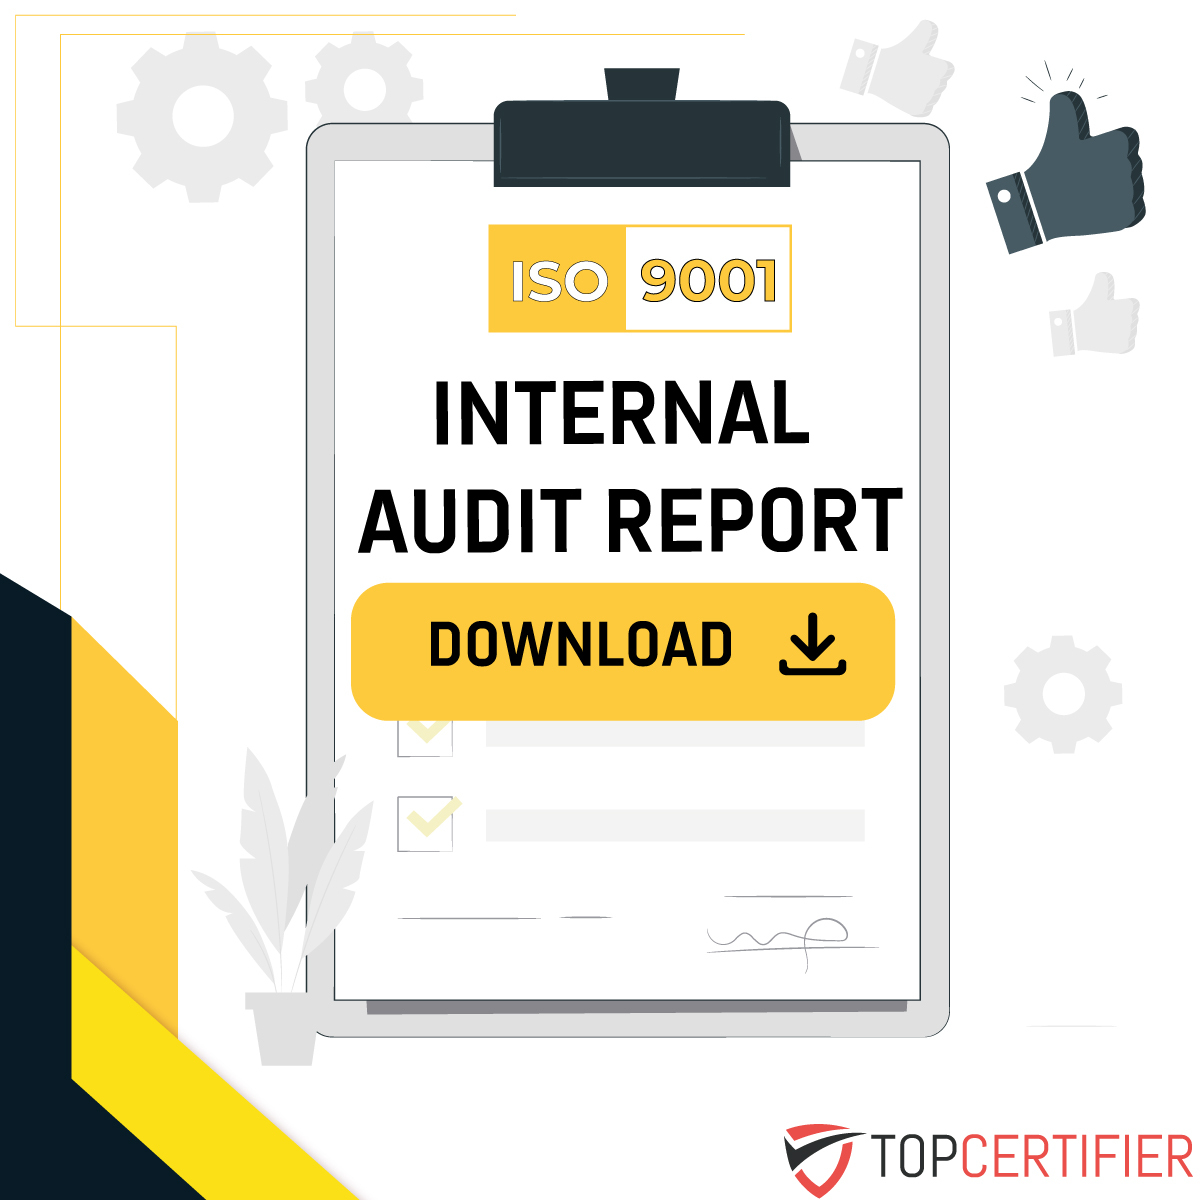 ISO 9001 Internal Audit Report